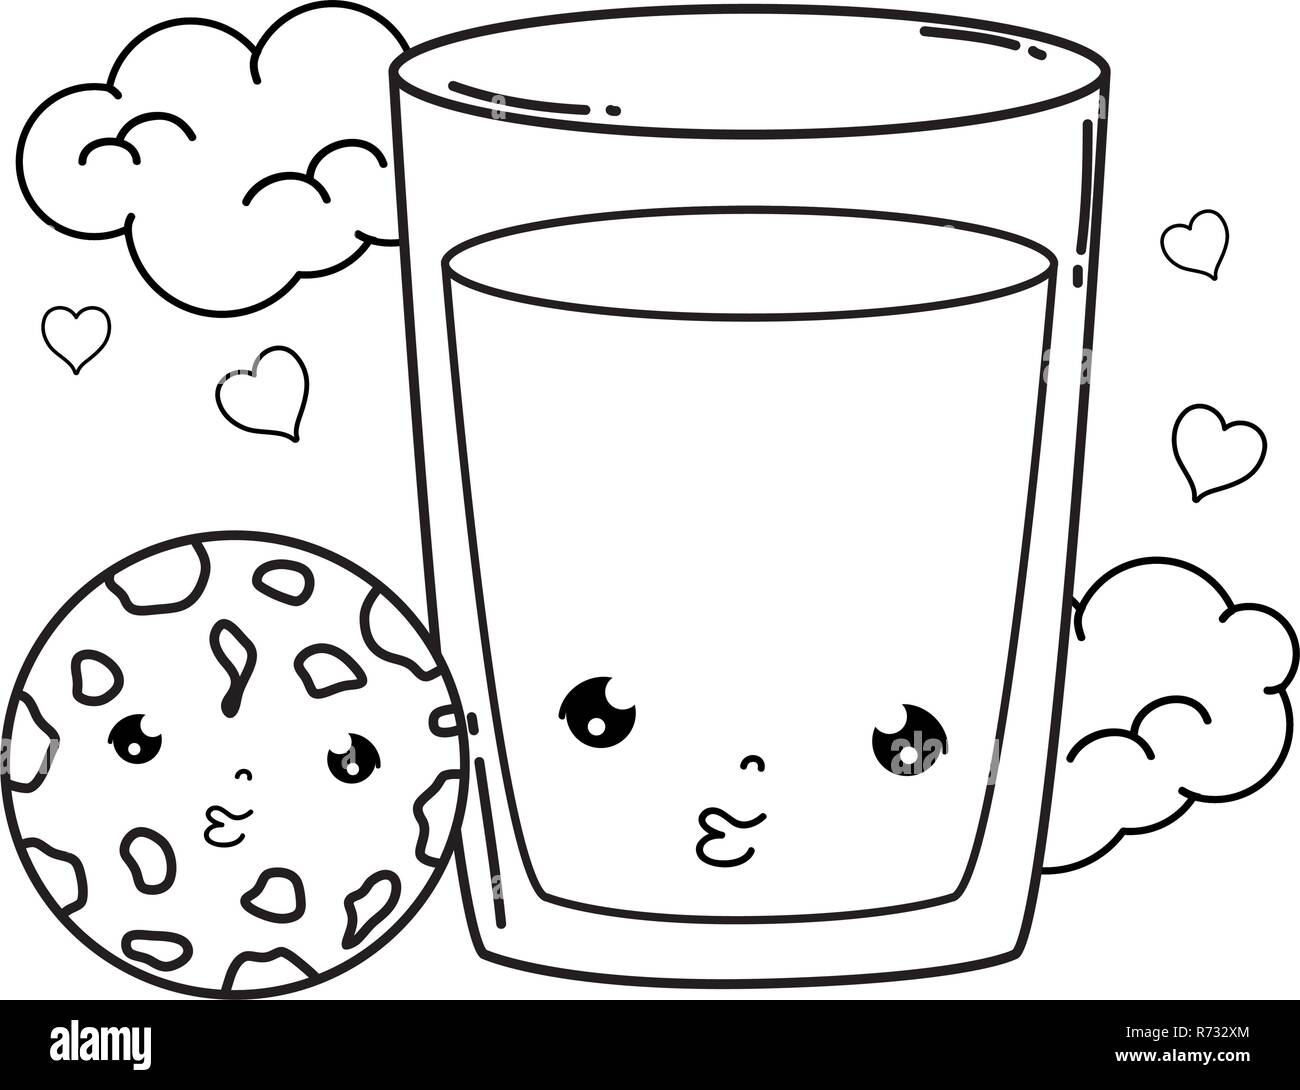 Milk Glass With Cookie Kawaii Character Stock Vector Image Art Alamy